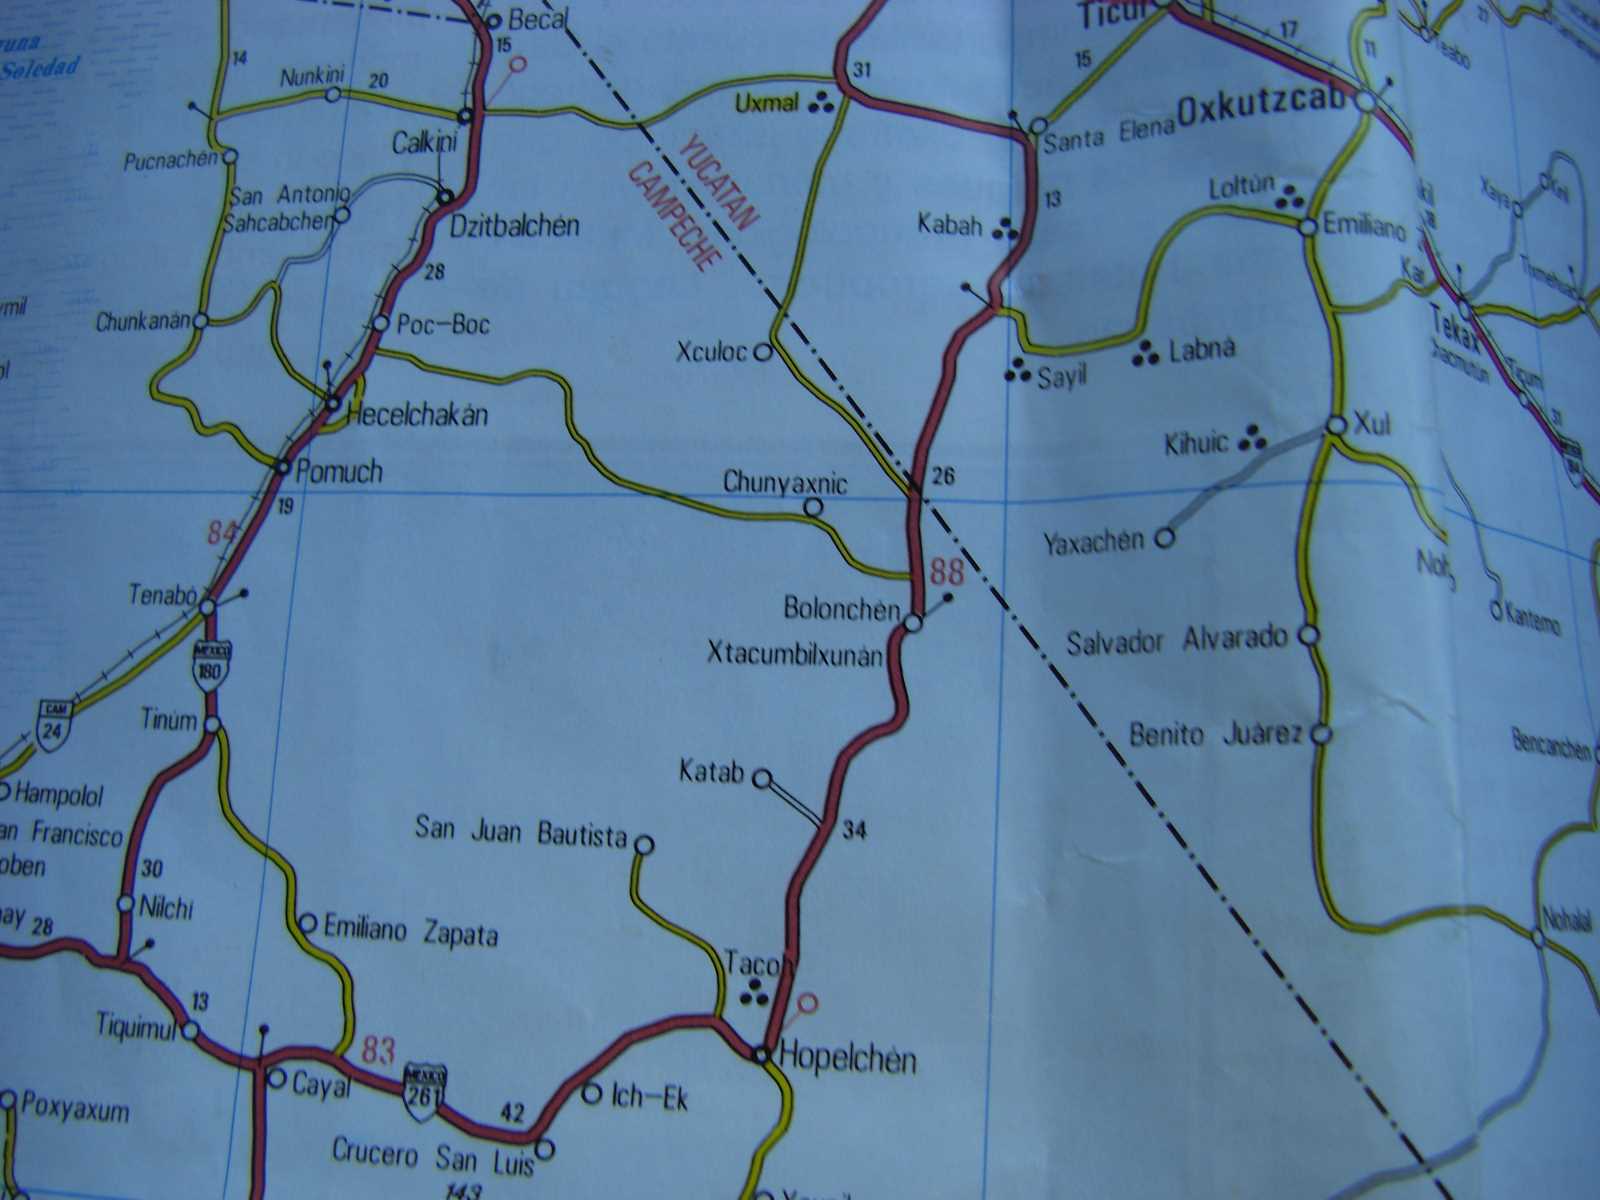 CIMG14
33 map of Hopelchen area
